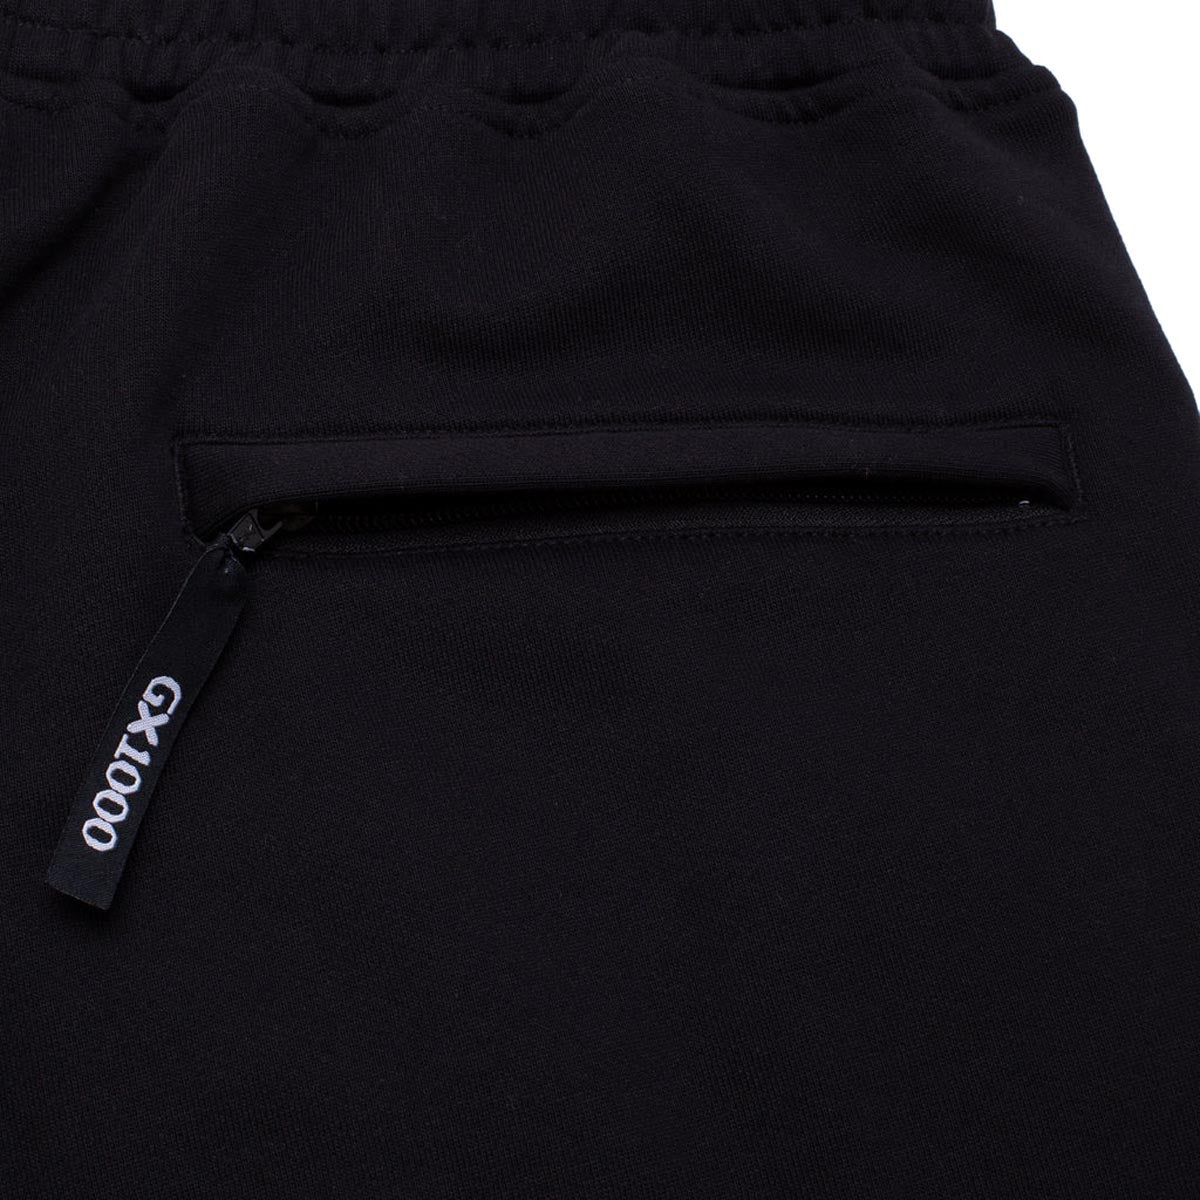 GX1000 Sweat Shorts - Black image 4